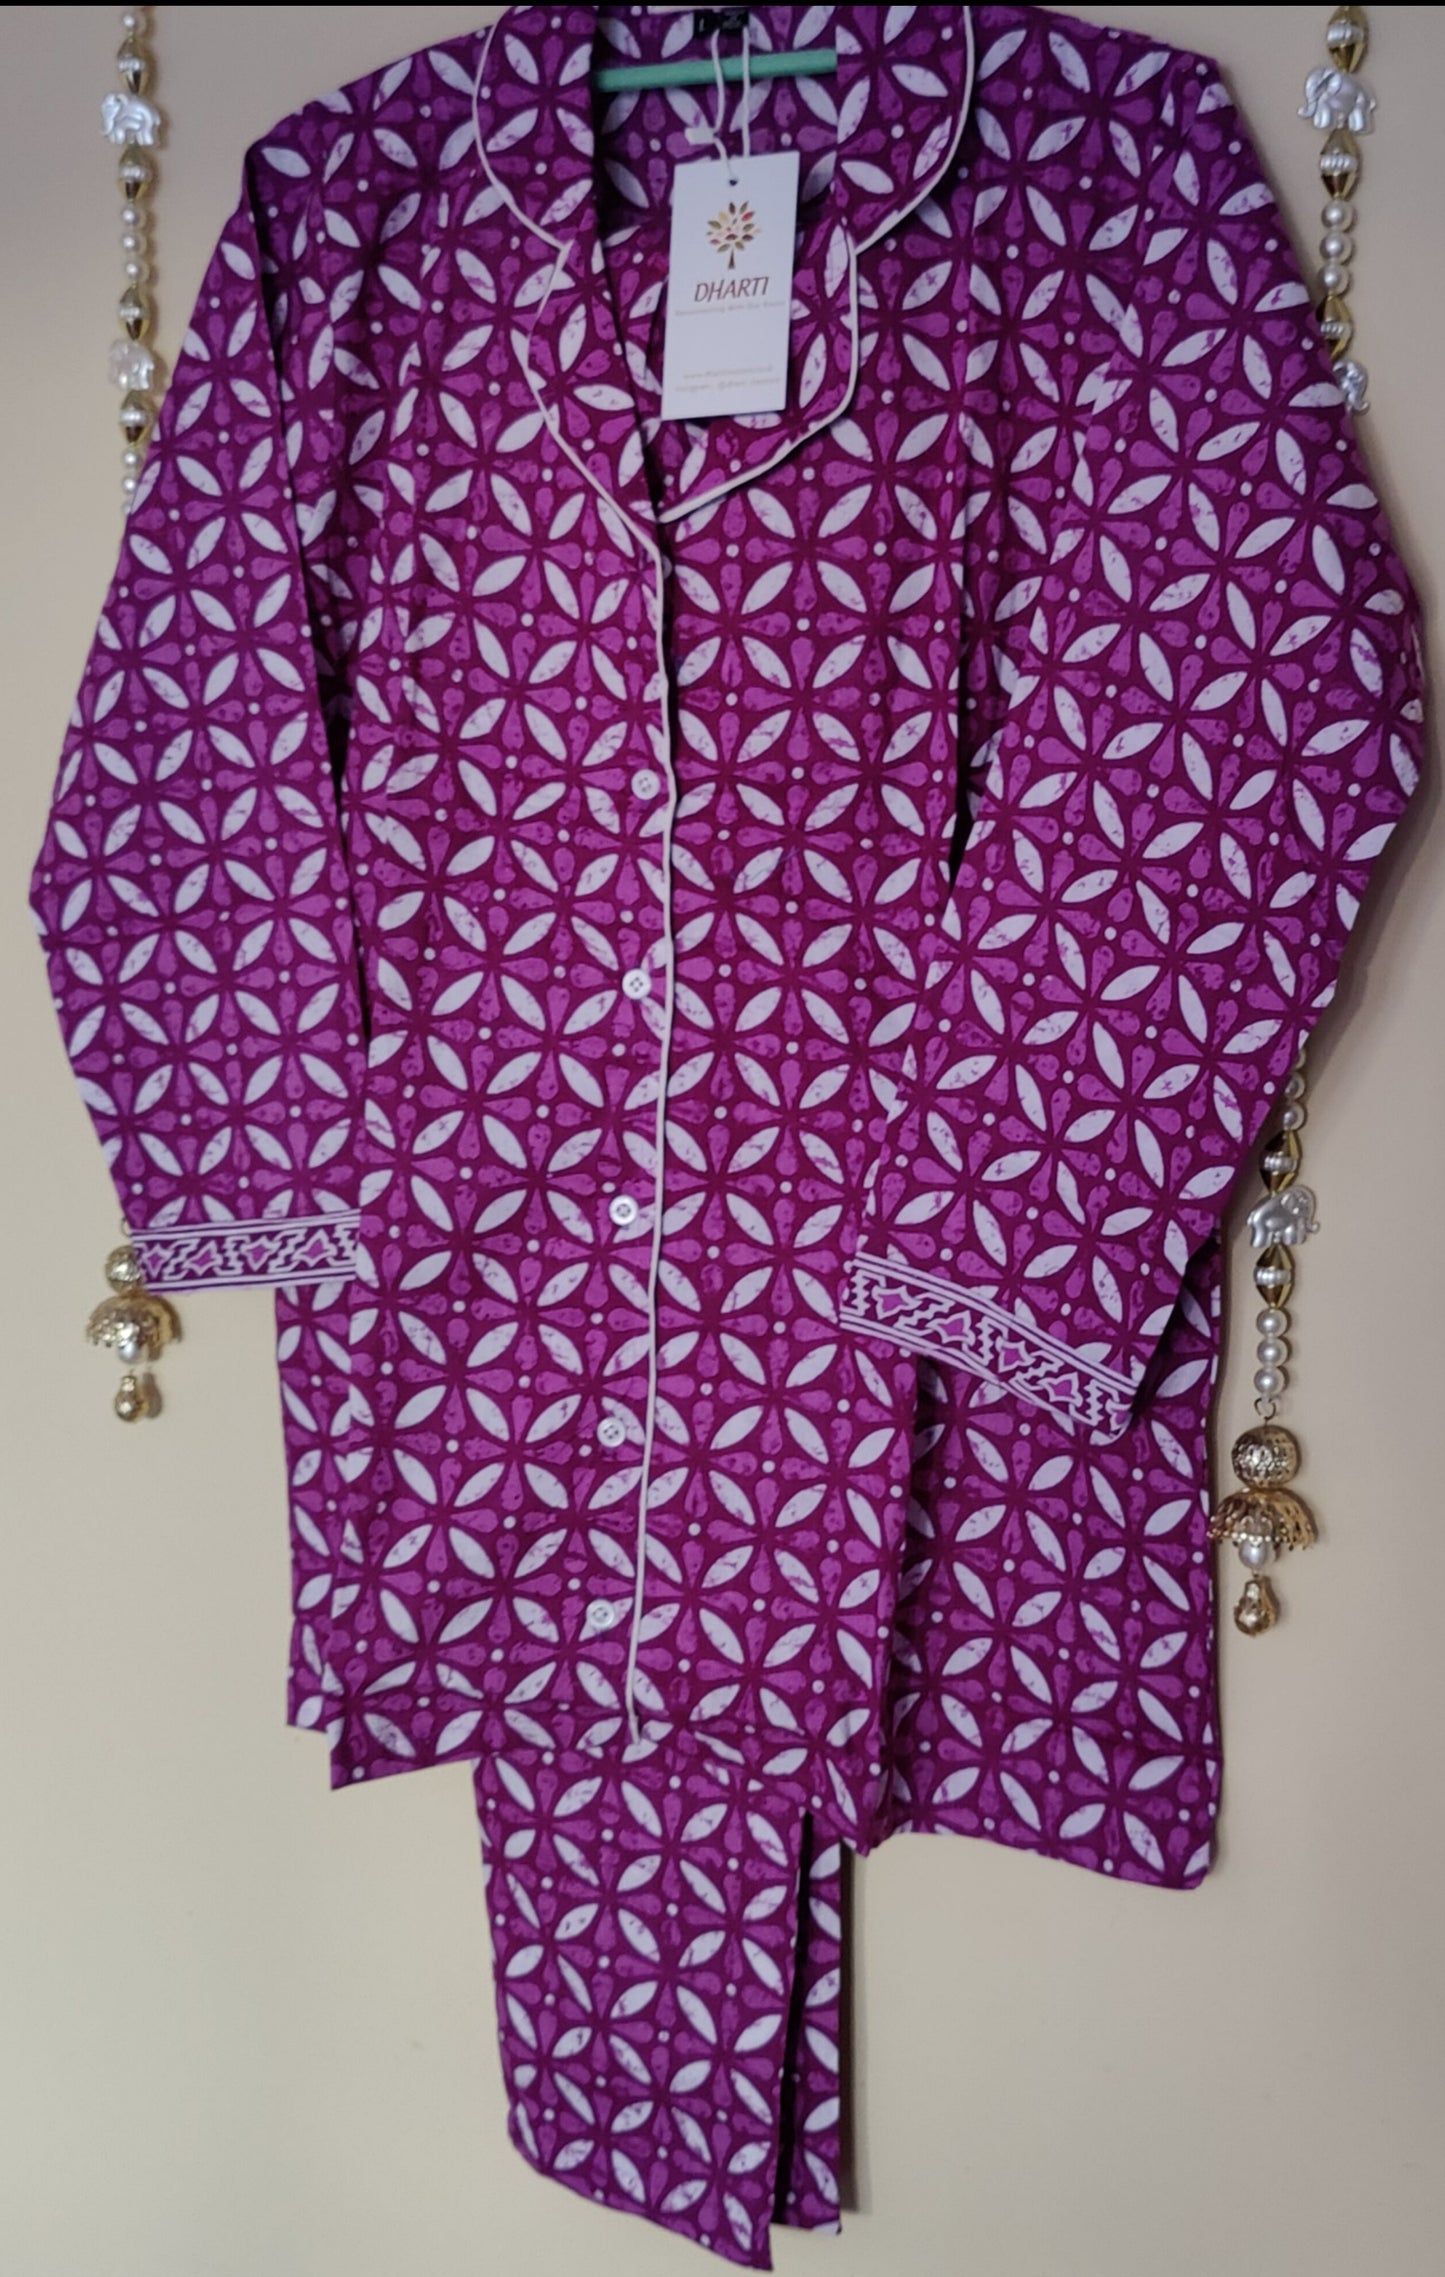 Batiq handprinted purple pyjama set on a hanger